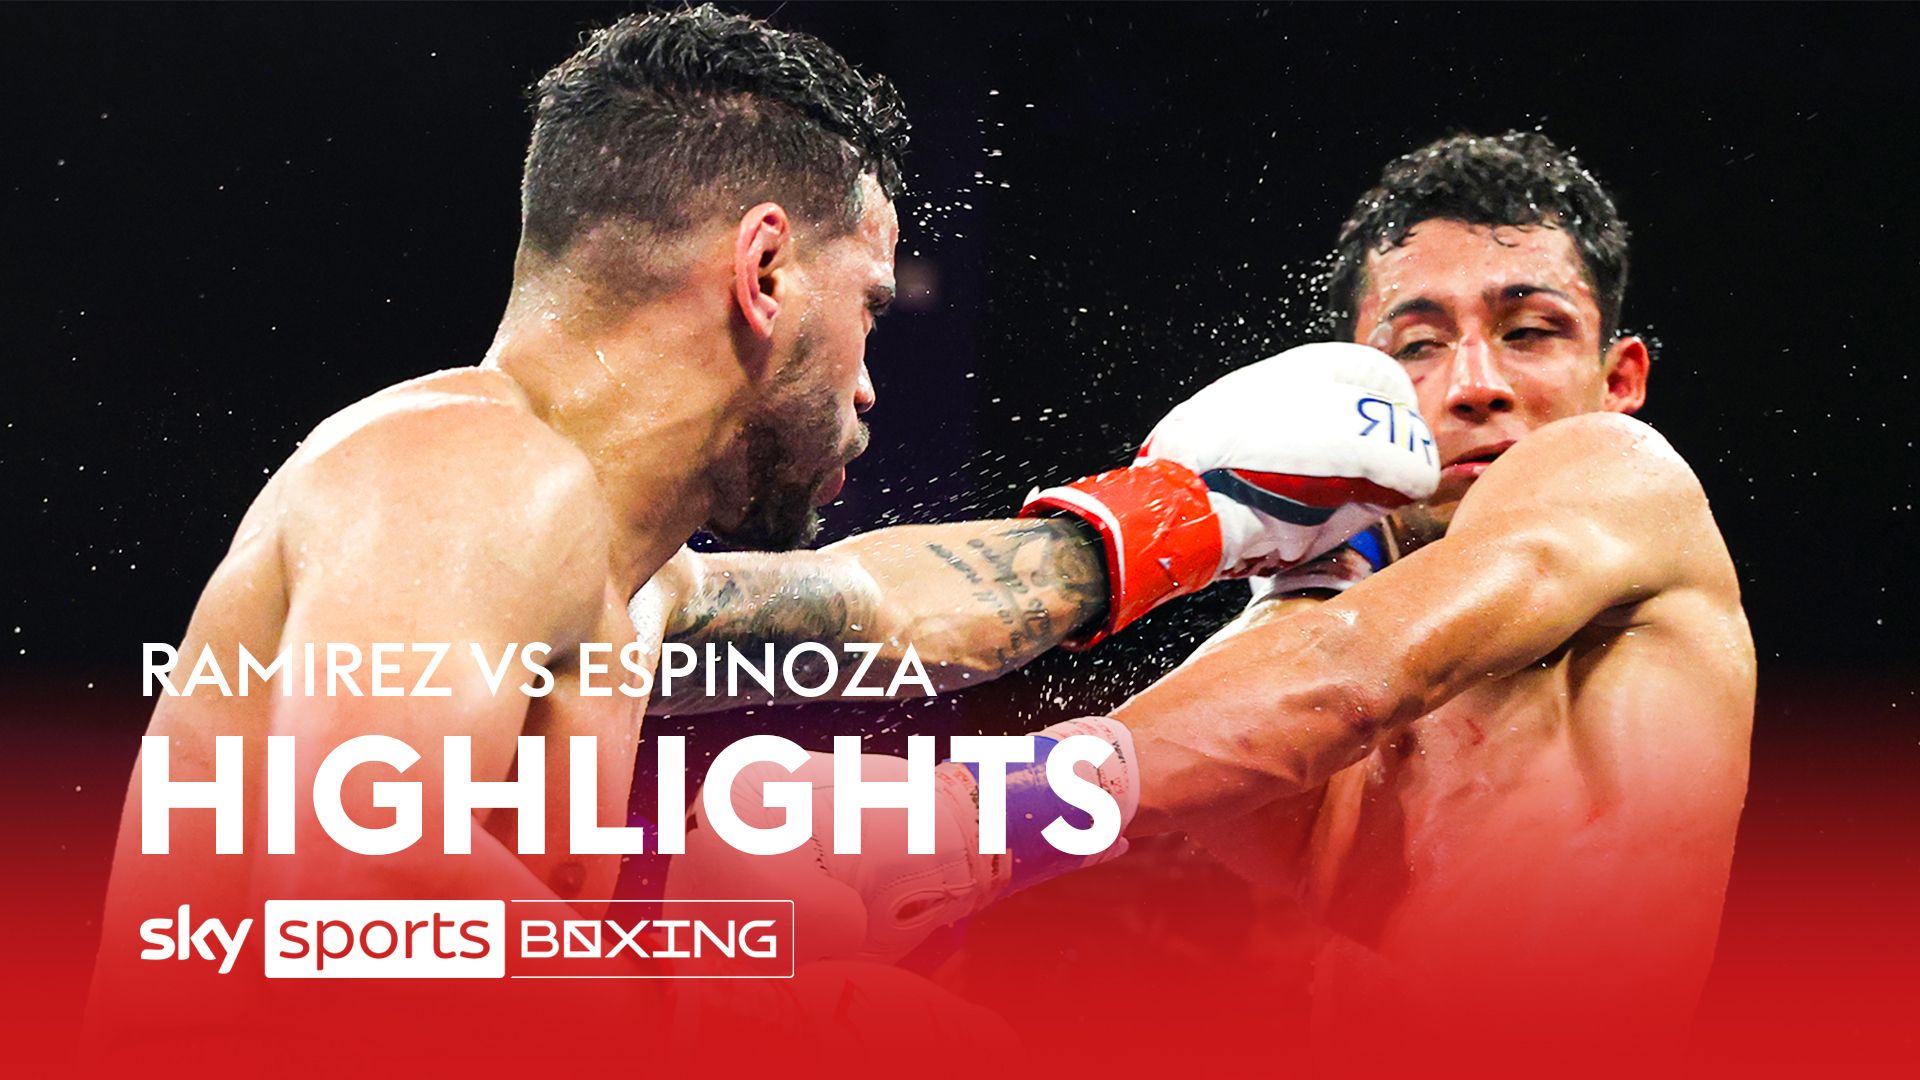 Highlights: Espinoza stuns Ramirez to claim WBO title